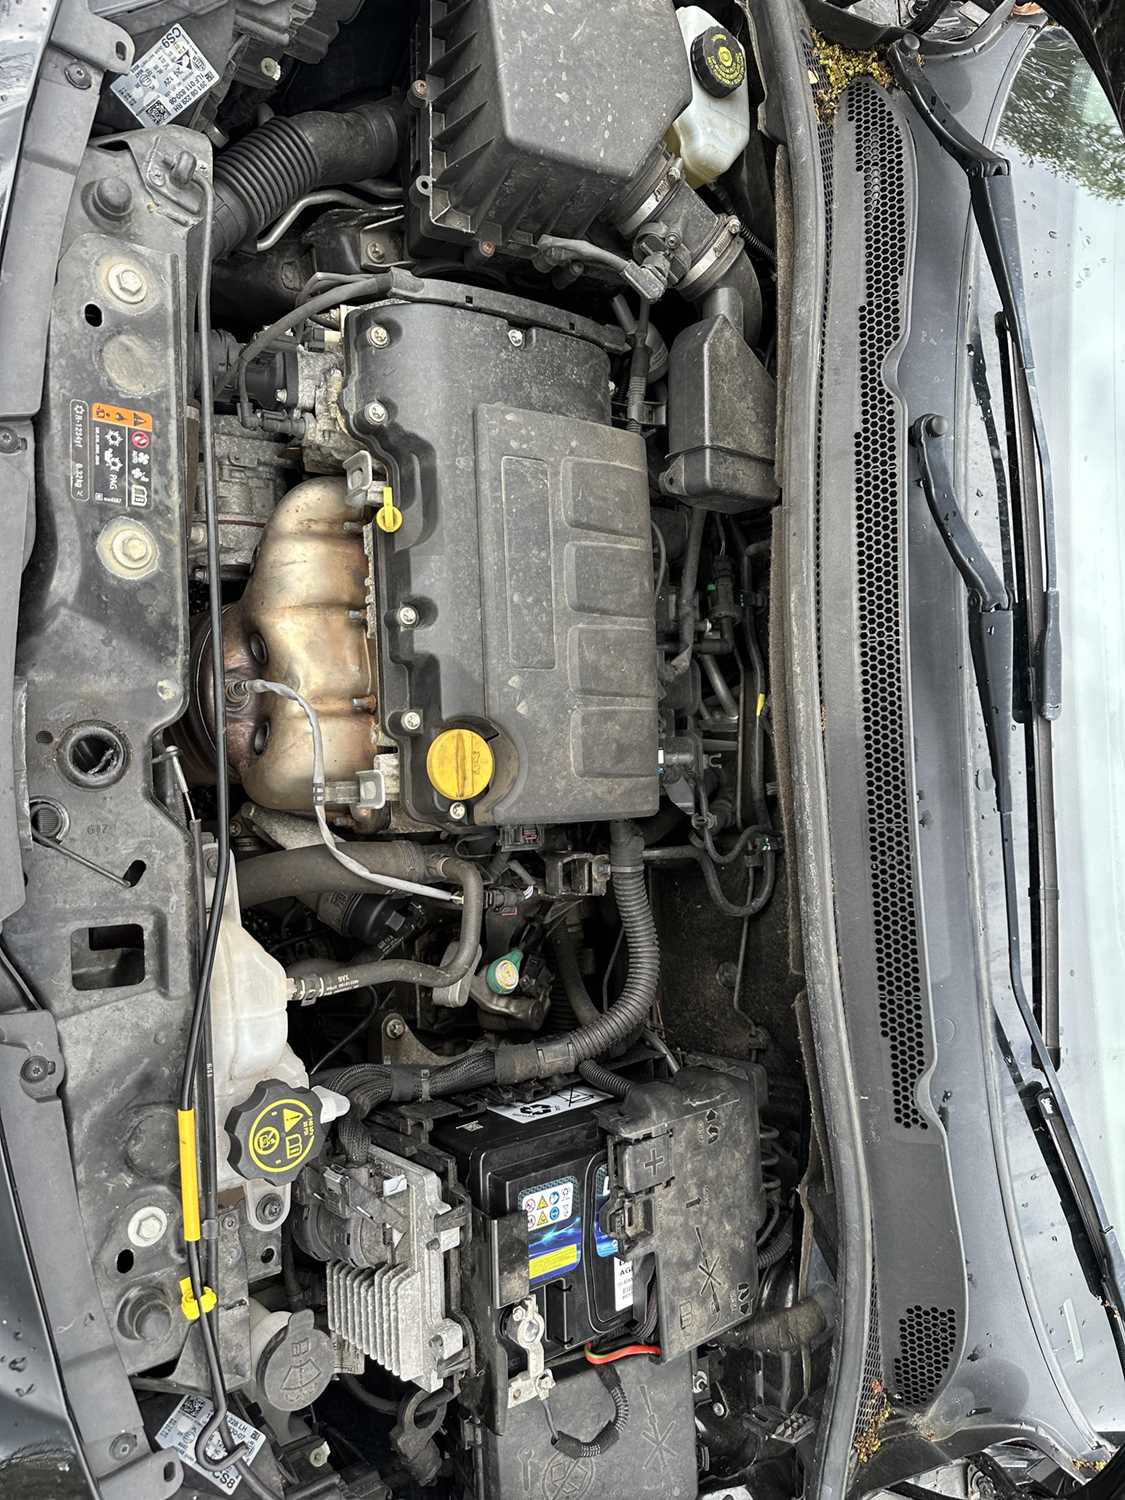 2019 Vauxhall Corsa SRI VX - Line Nav Black, 5 door hatchback, manual, reg. no. VU19 RYK - Image 14 of 15